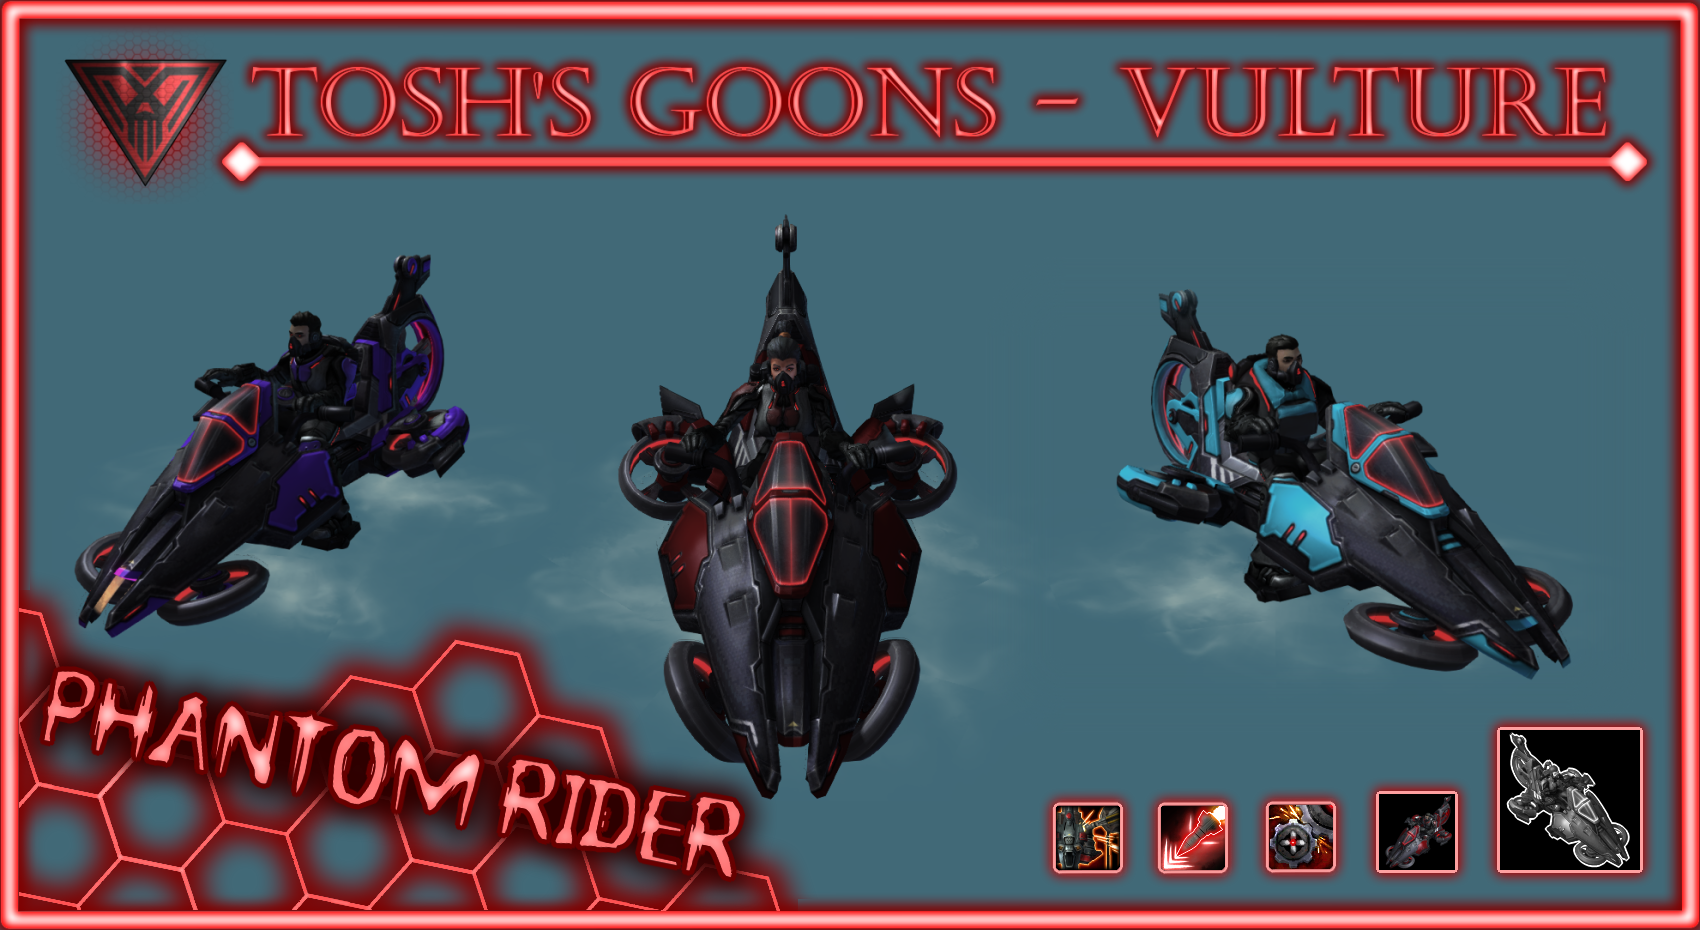 Phantom Rider - Tosh's Goons Vulture